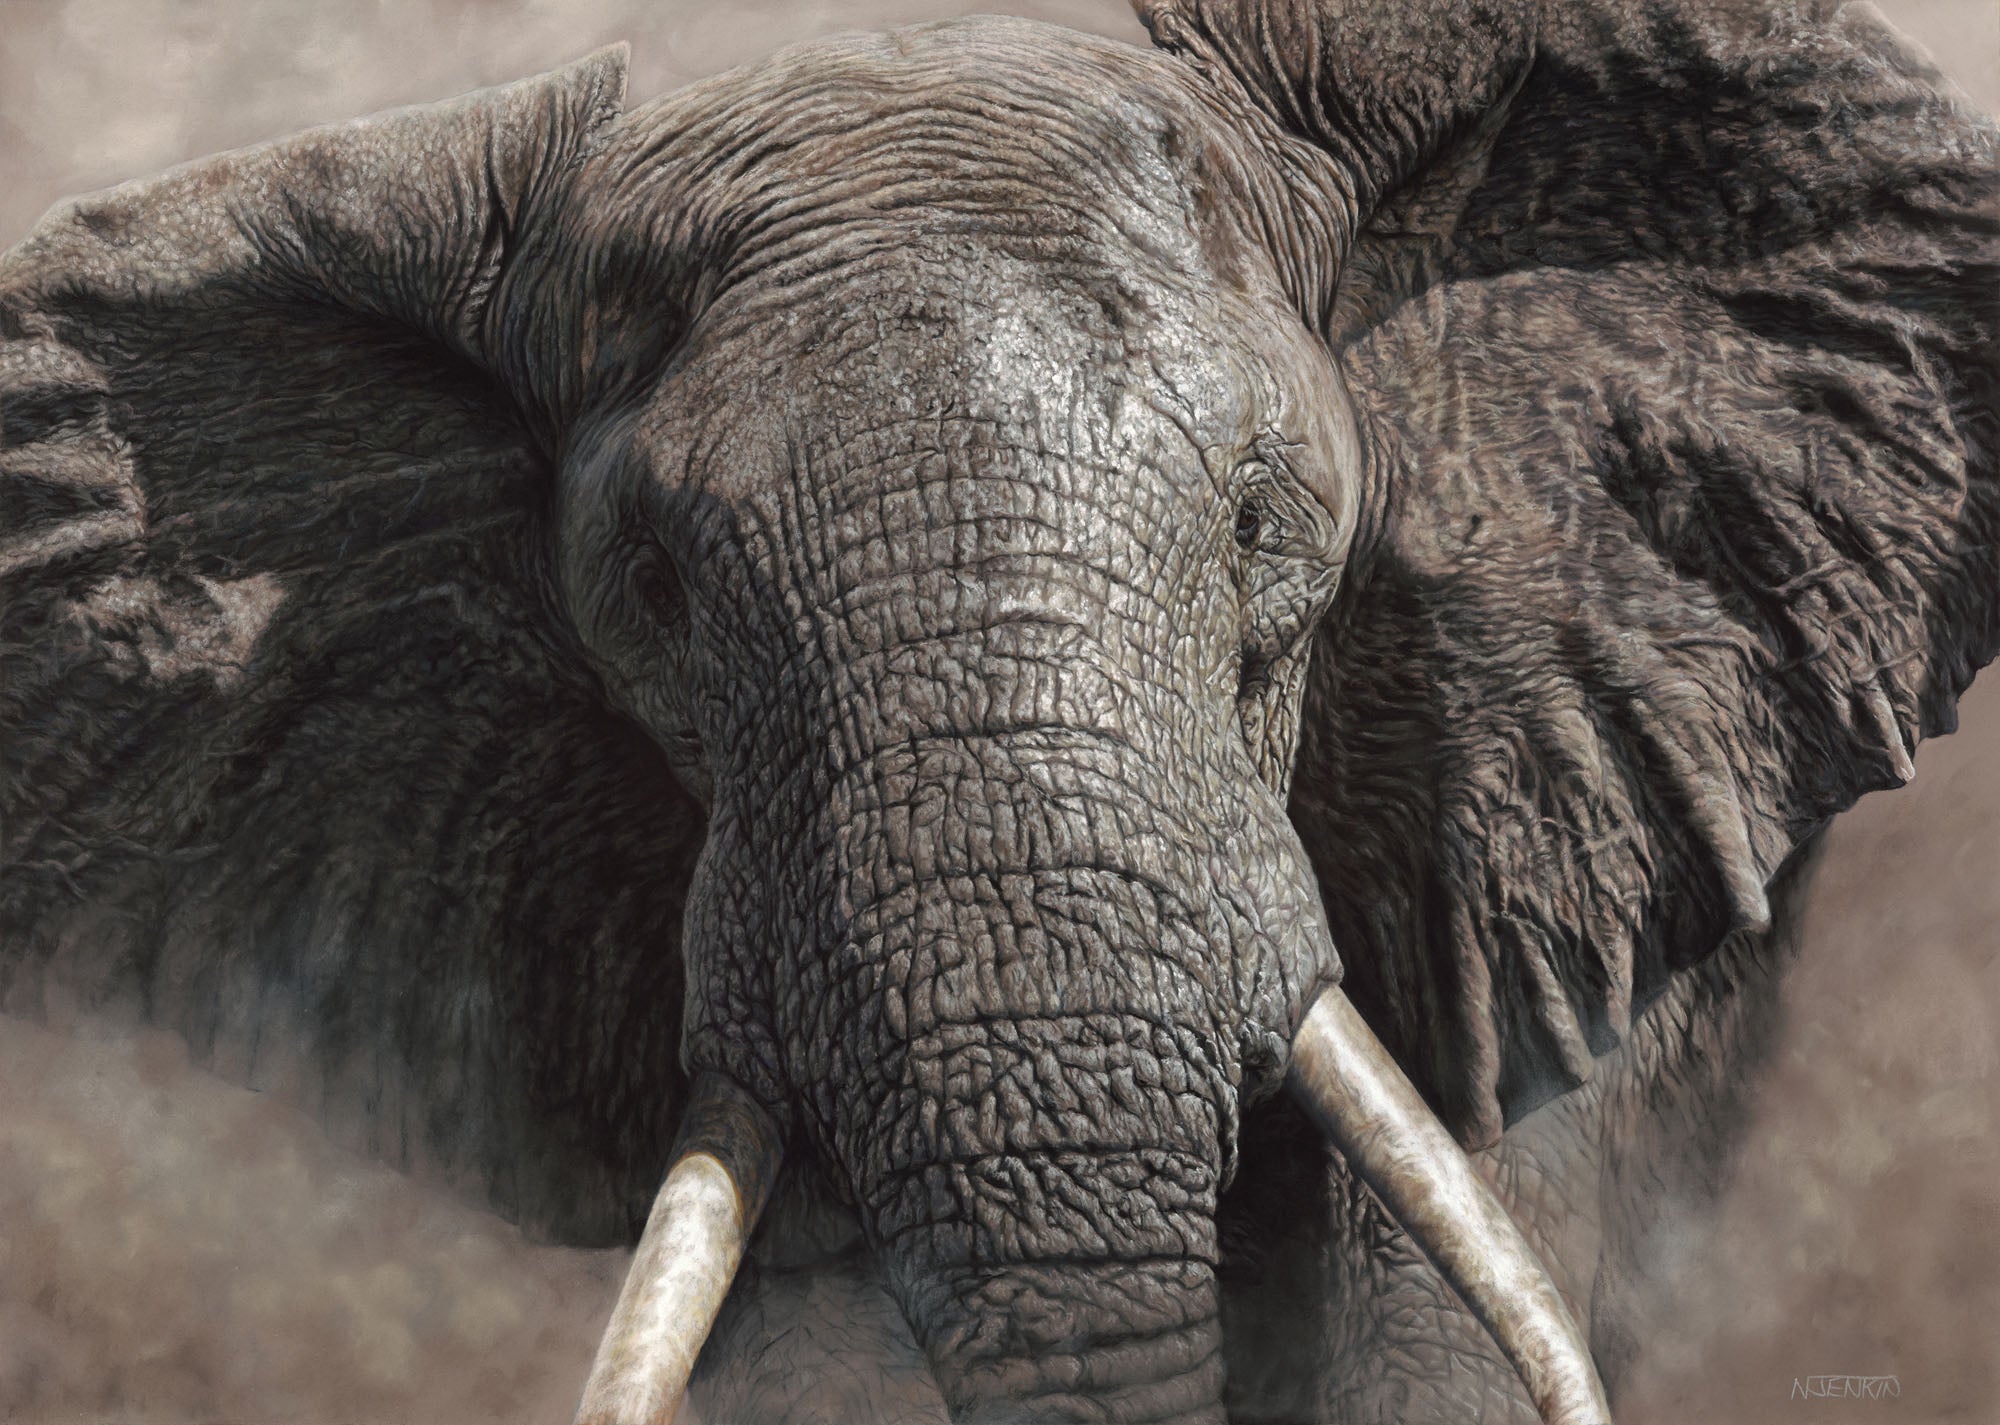 Naomi Jenkin Art - The Elephant Charge.jpg__PID:9afb28e3-2c9e-47fd-97a5-3c8d99e67531